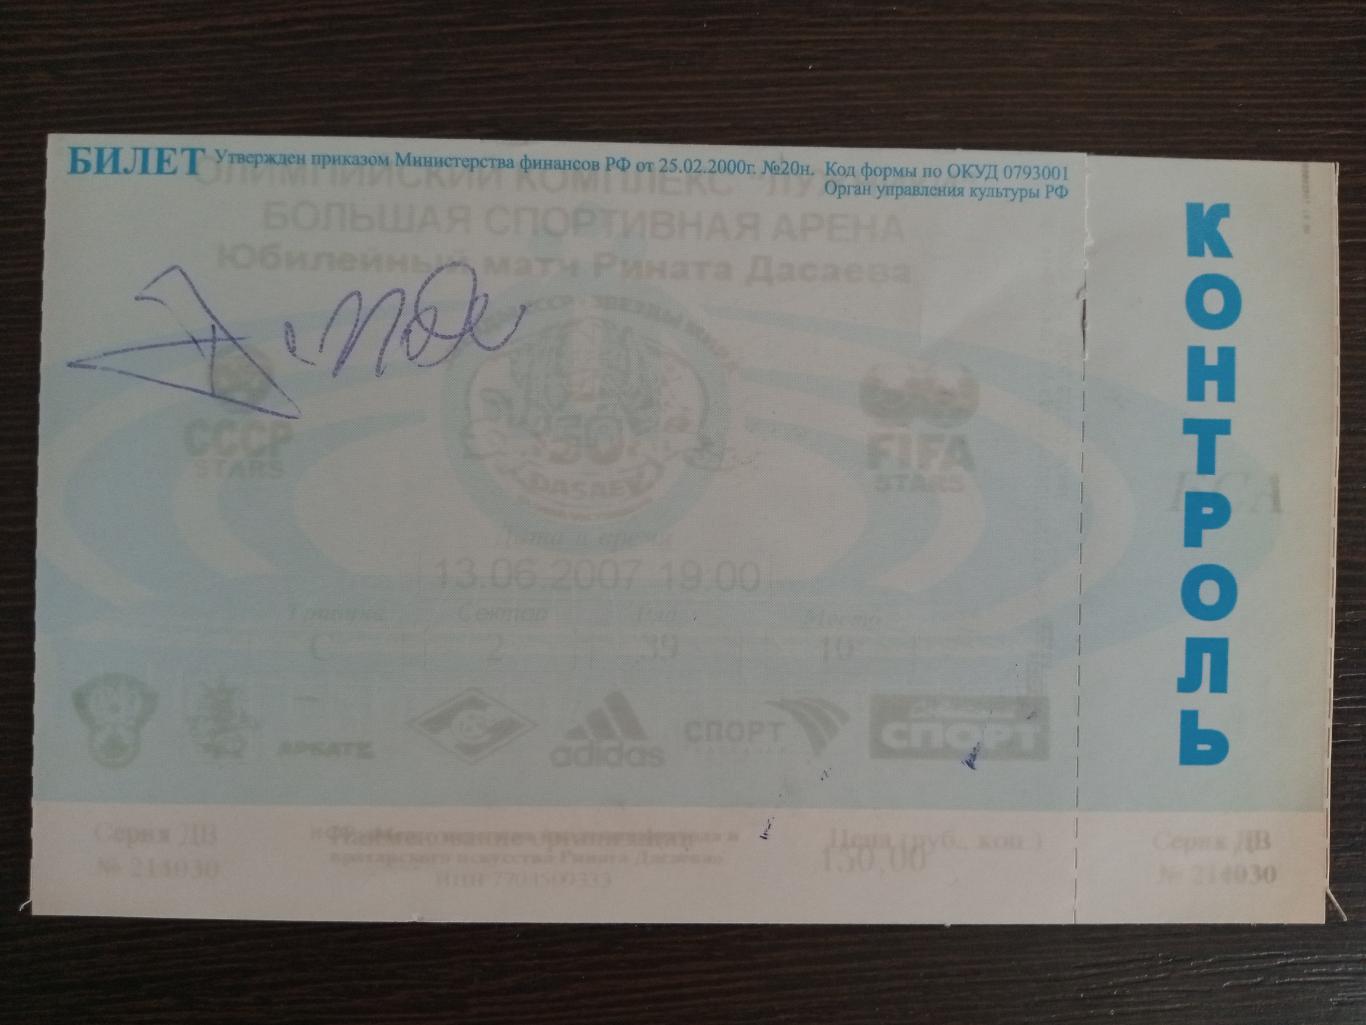 Билет на матч-юбилей Рината Дасаева с автографом Фернандо Де Наполи